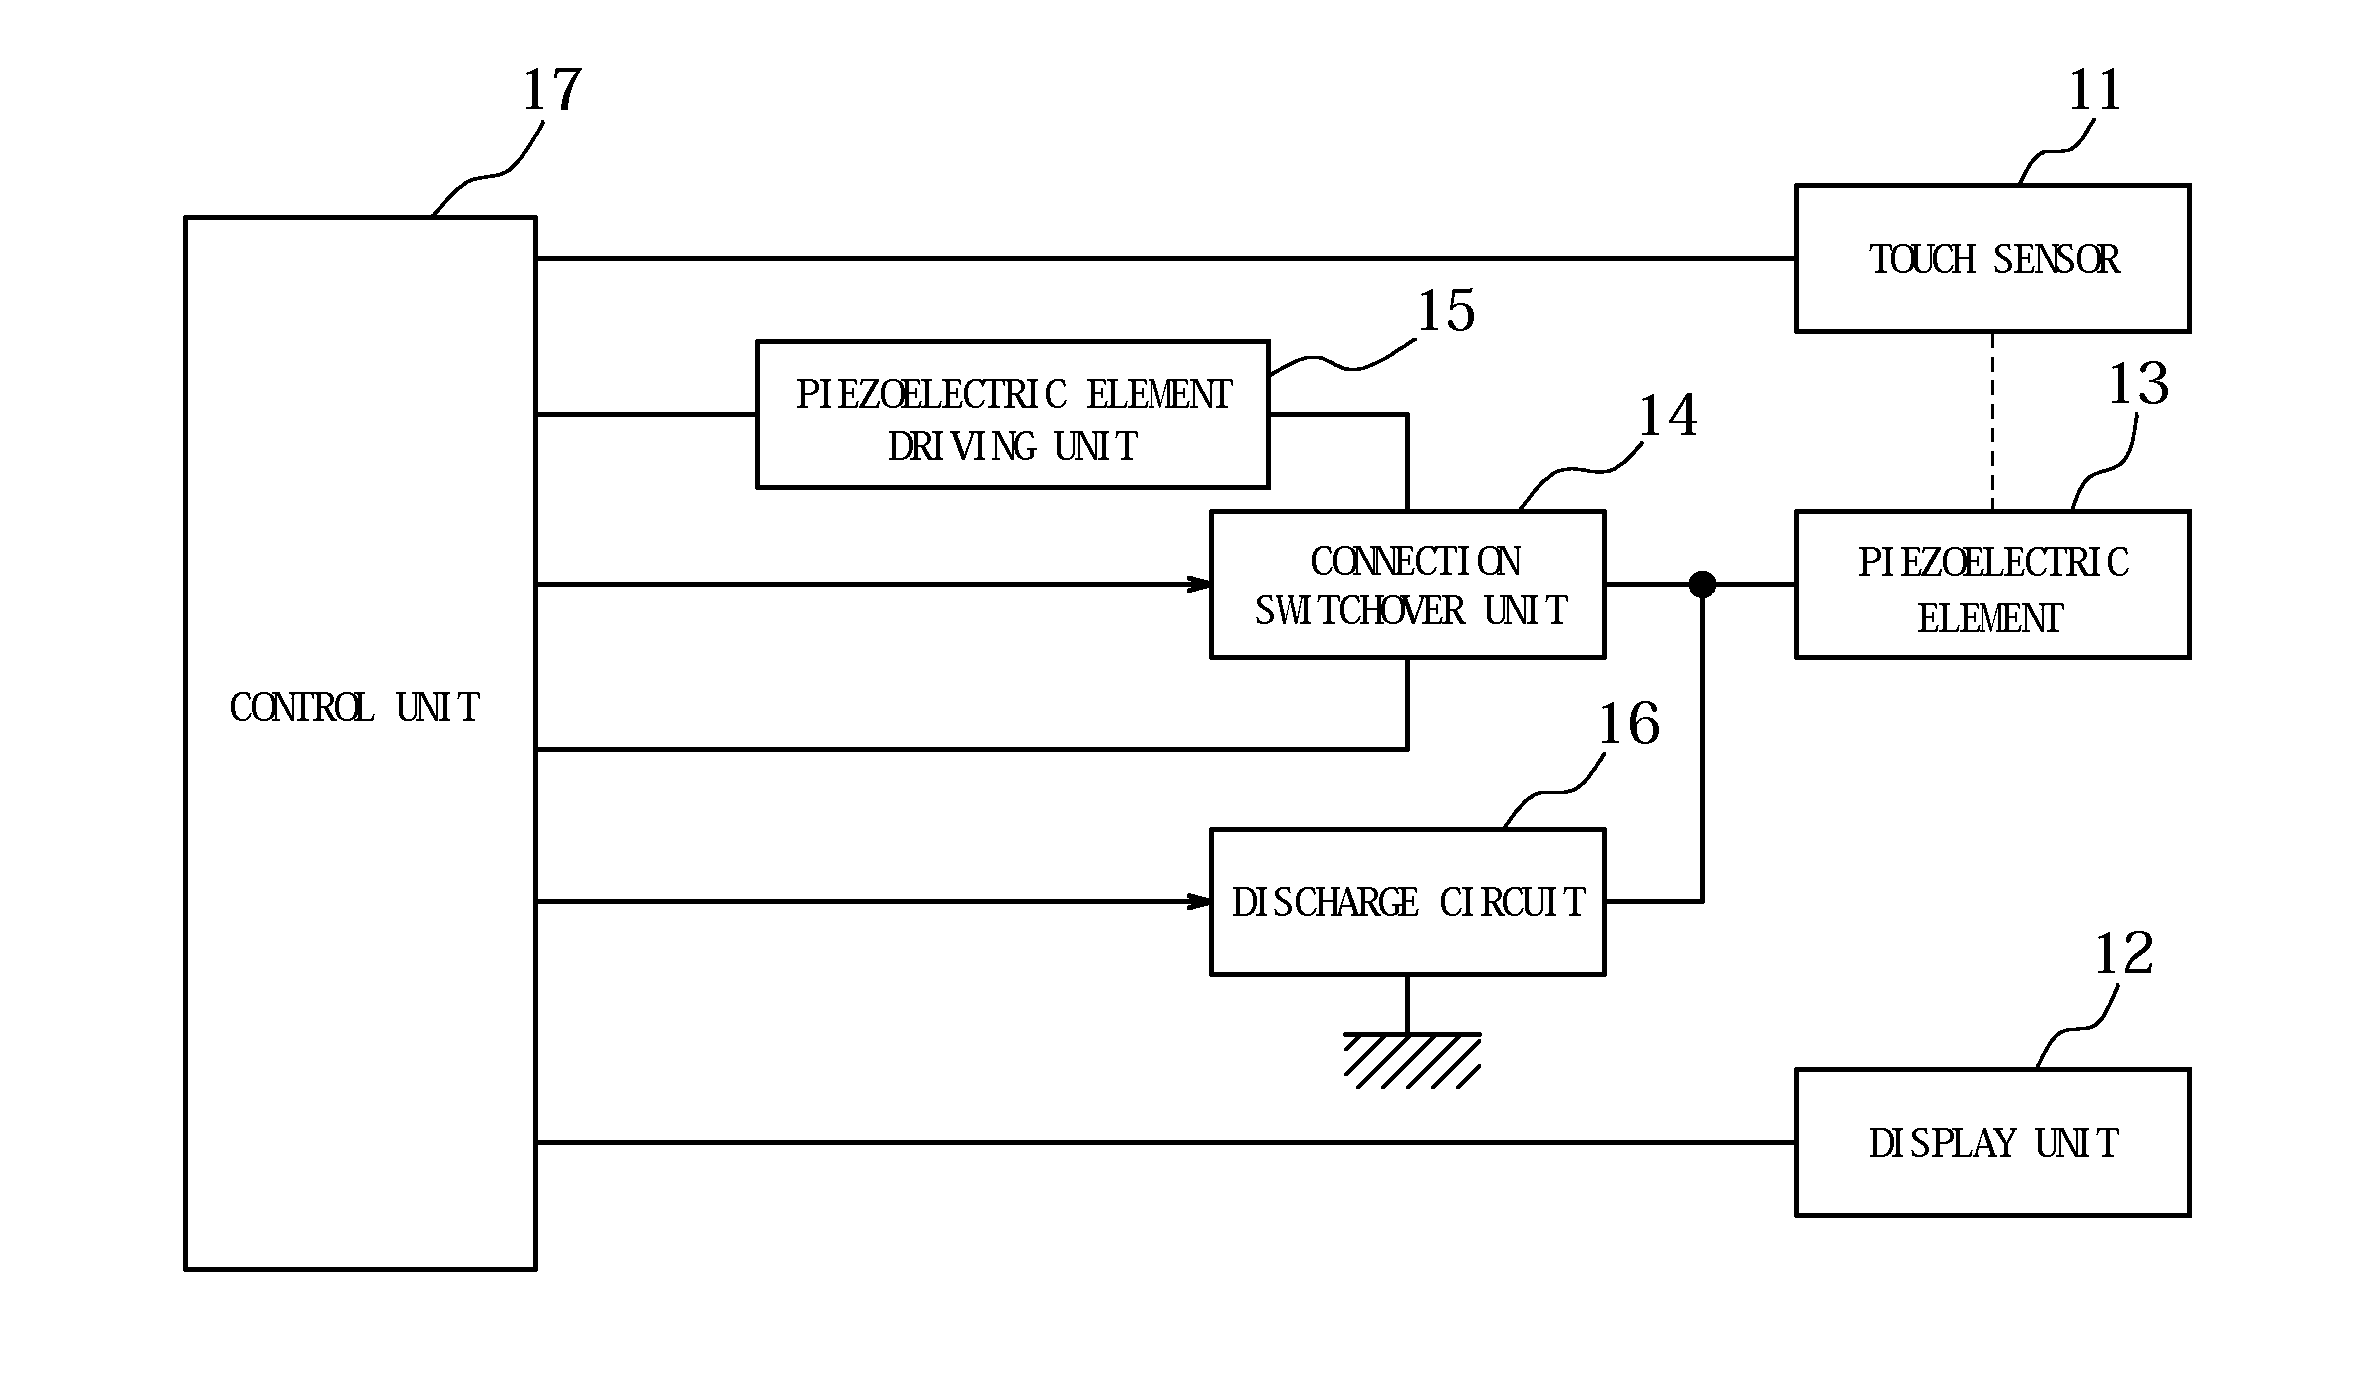 Input apparatus and control method for input apparatus